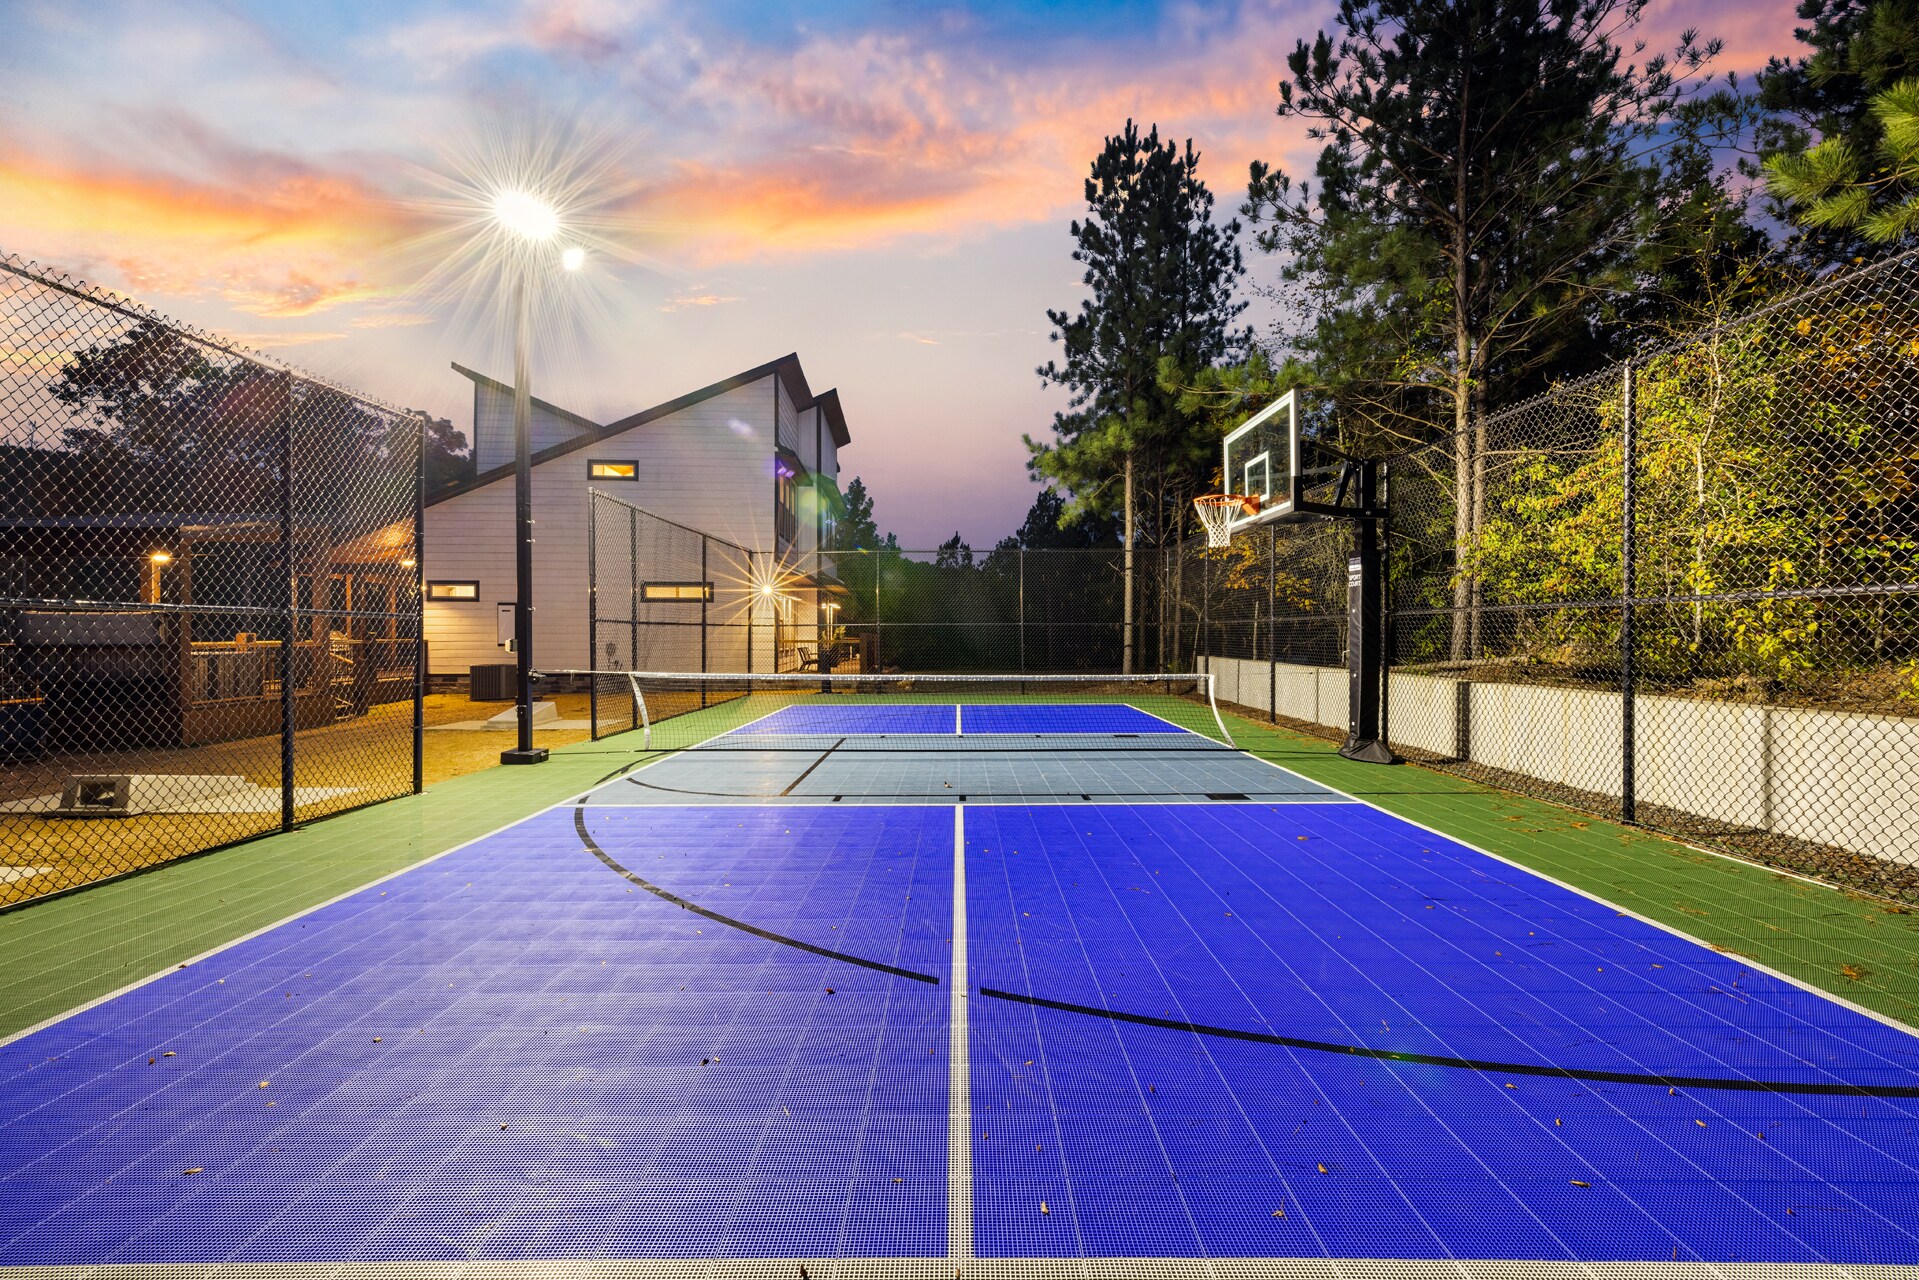 Sport court includes basketball, tennis & pickle ball court